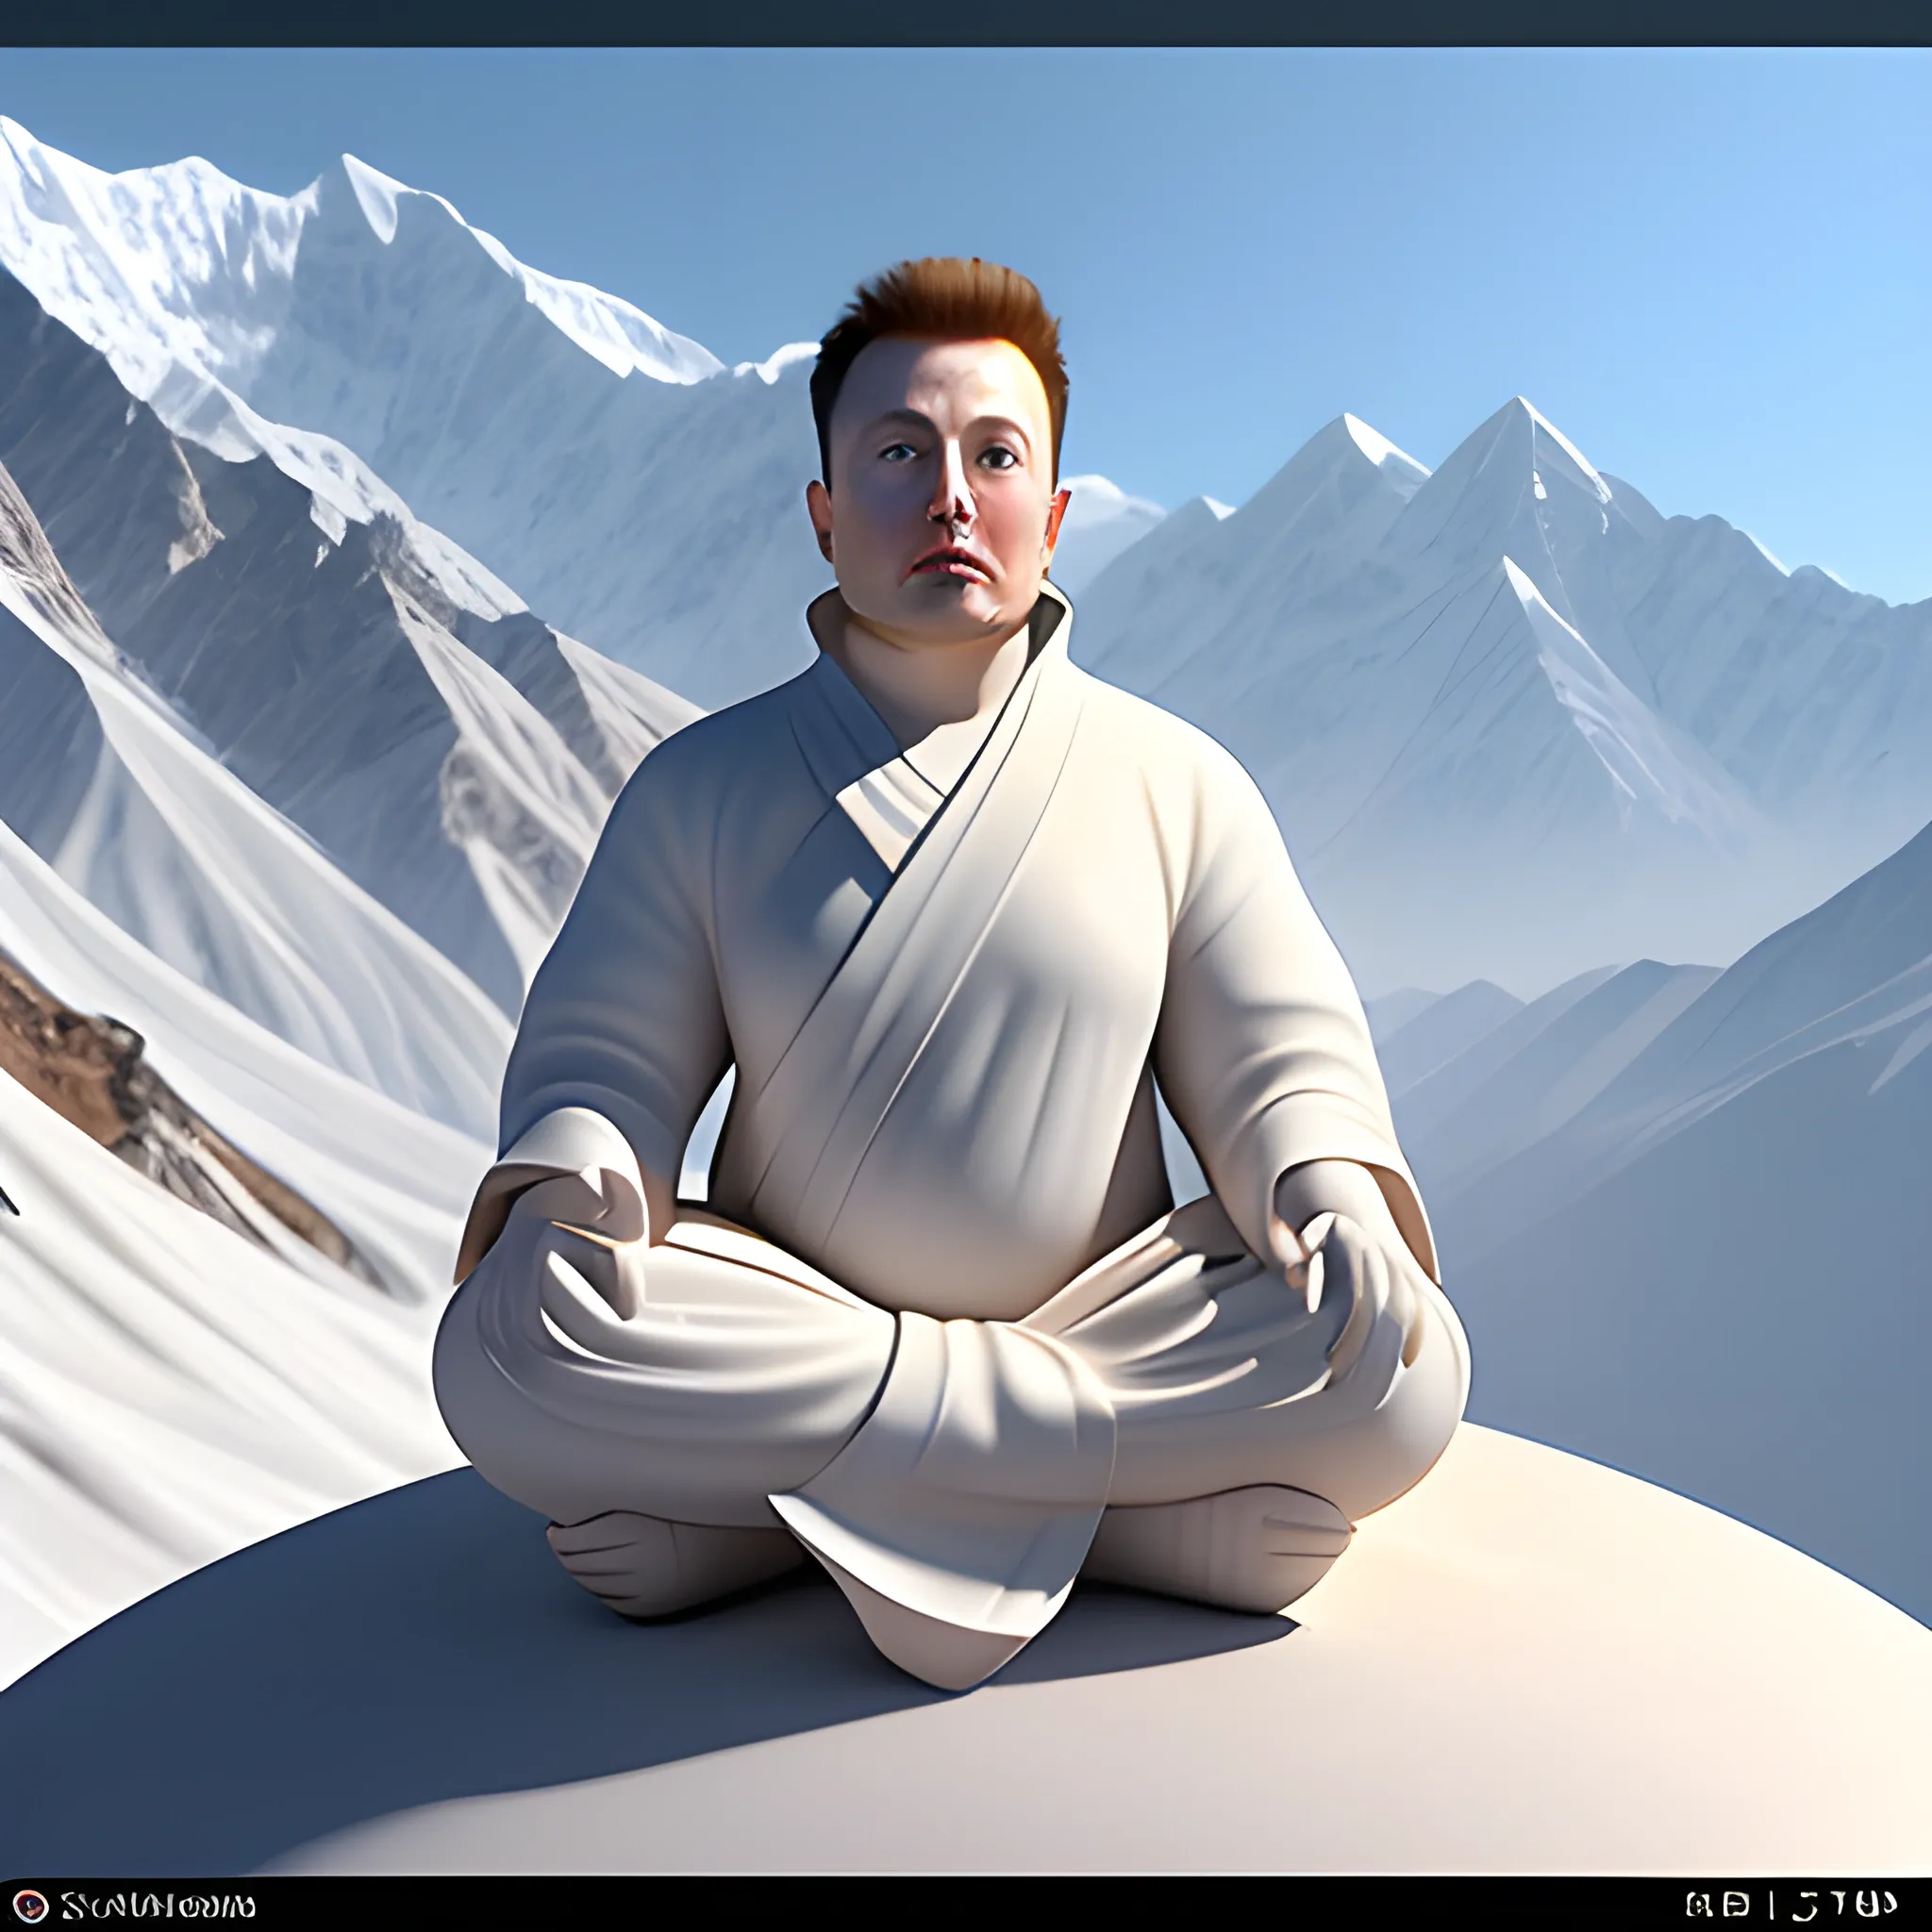 elon musk as monk in himalayas , 3D